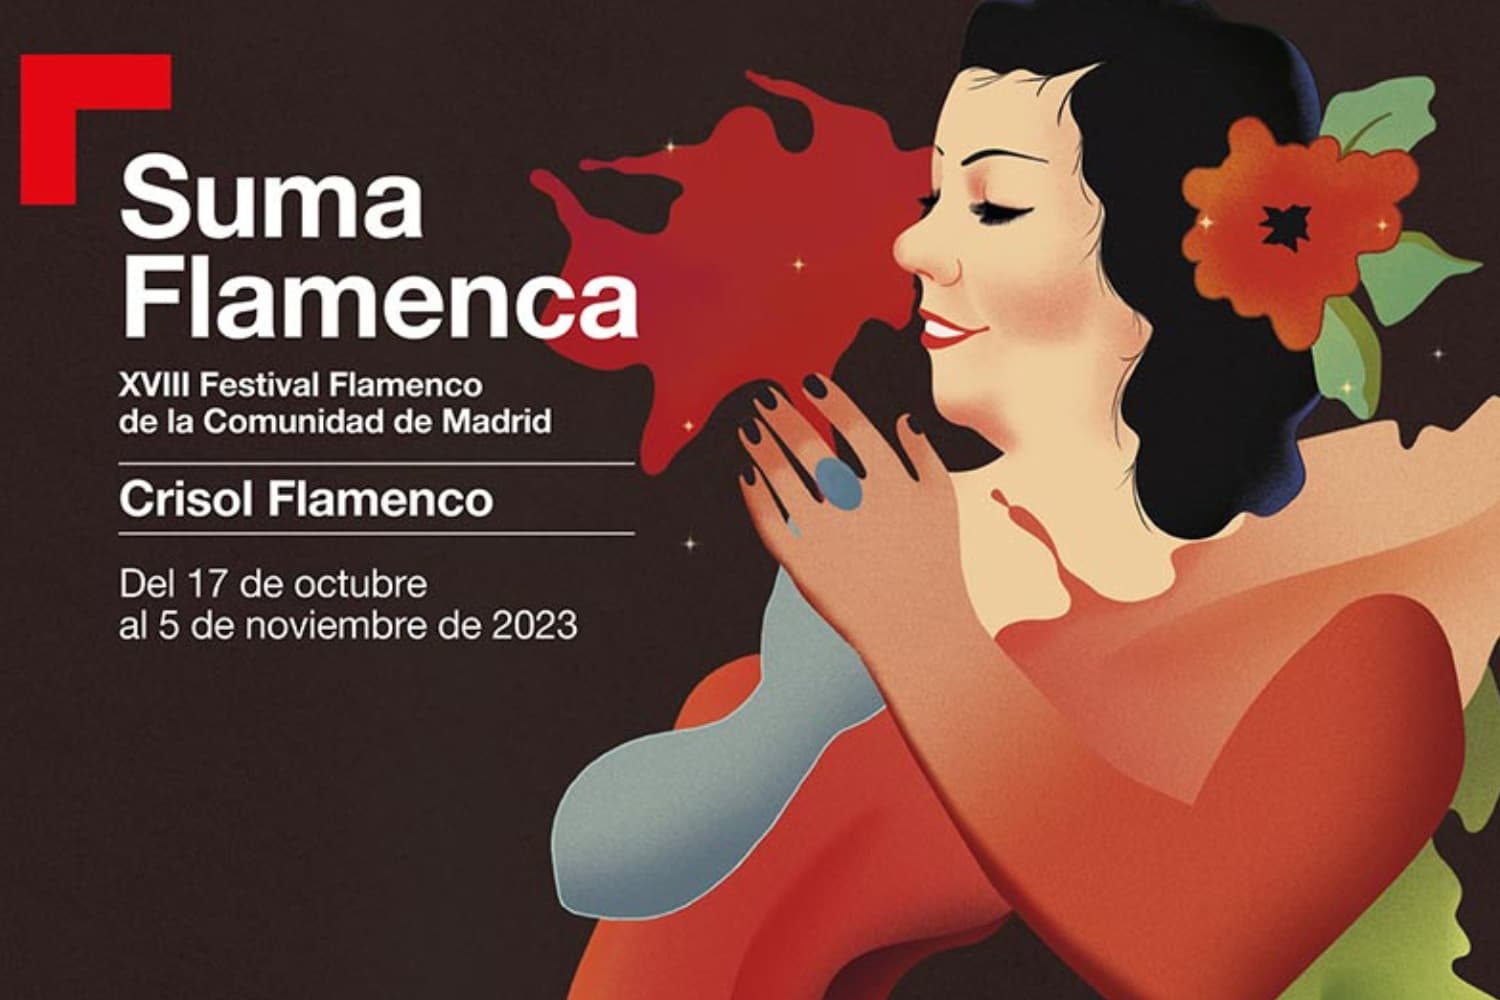 The 18th edition of the Suma Flamenca festival arrives 